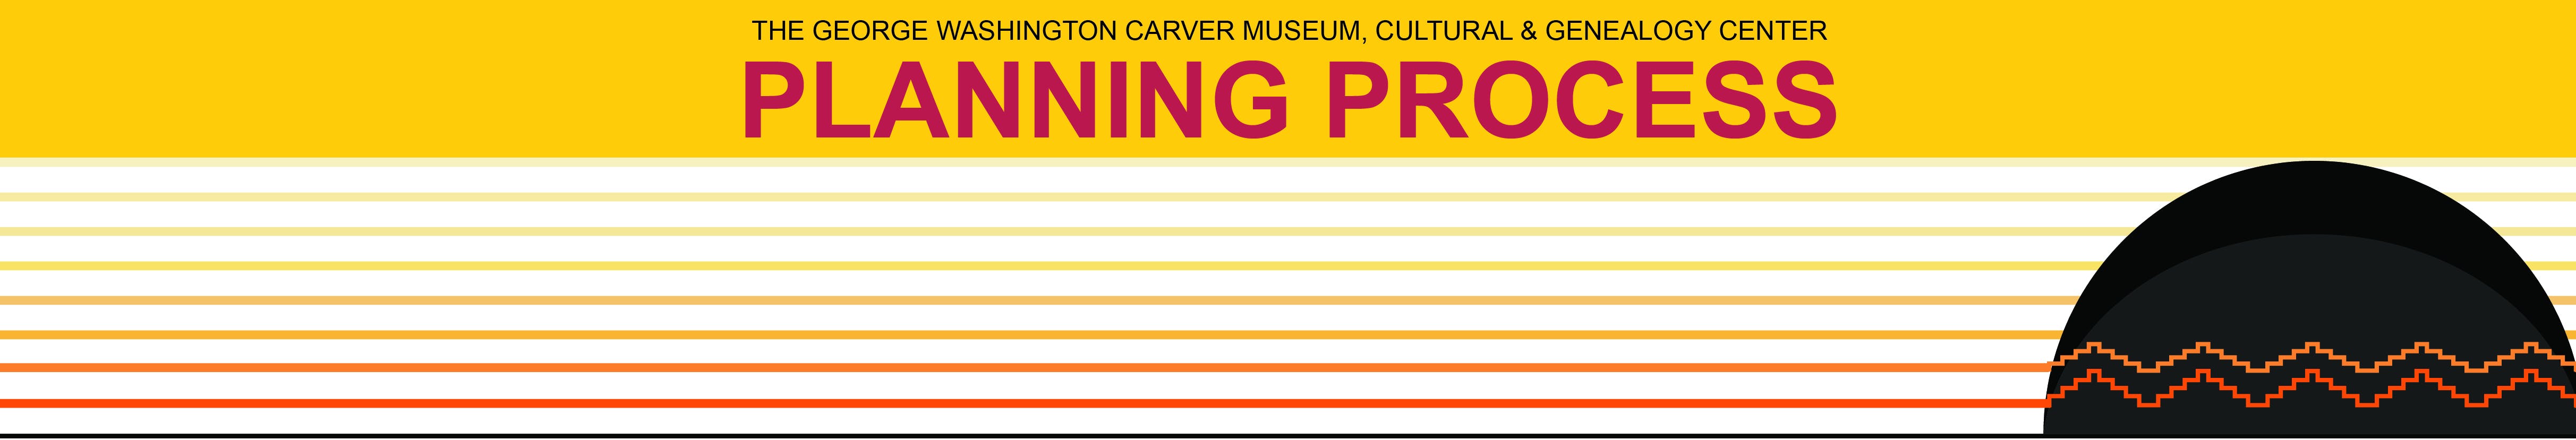 CarverMuseumATX planning process